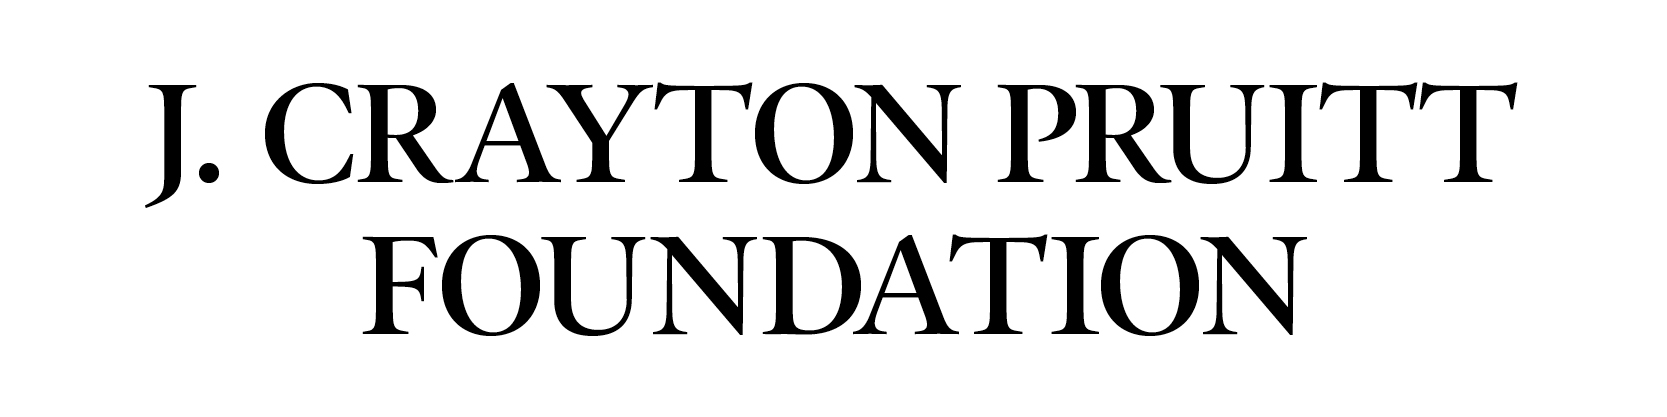 J. Crayton Pruitt Foundation